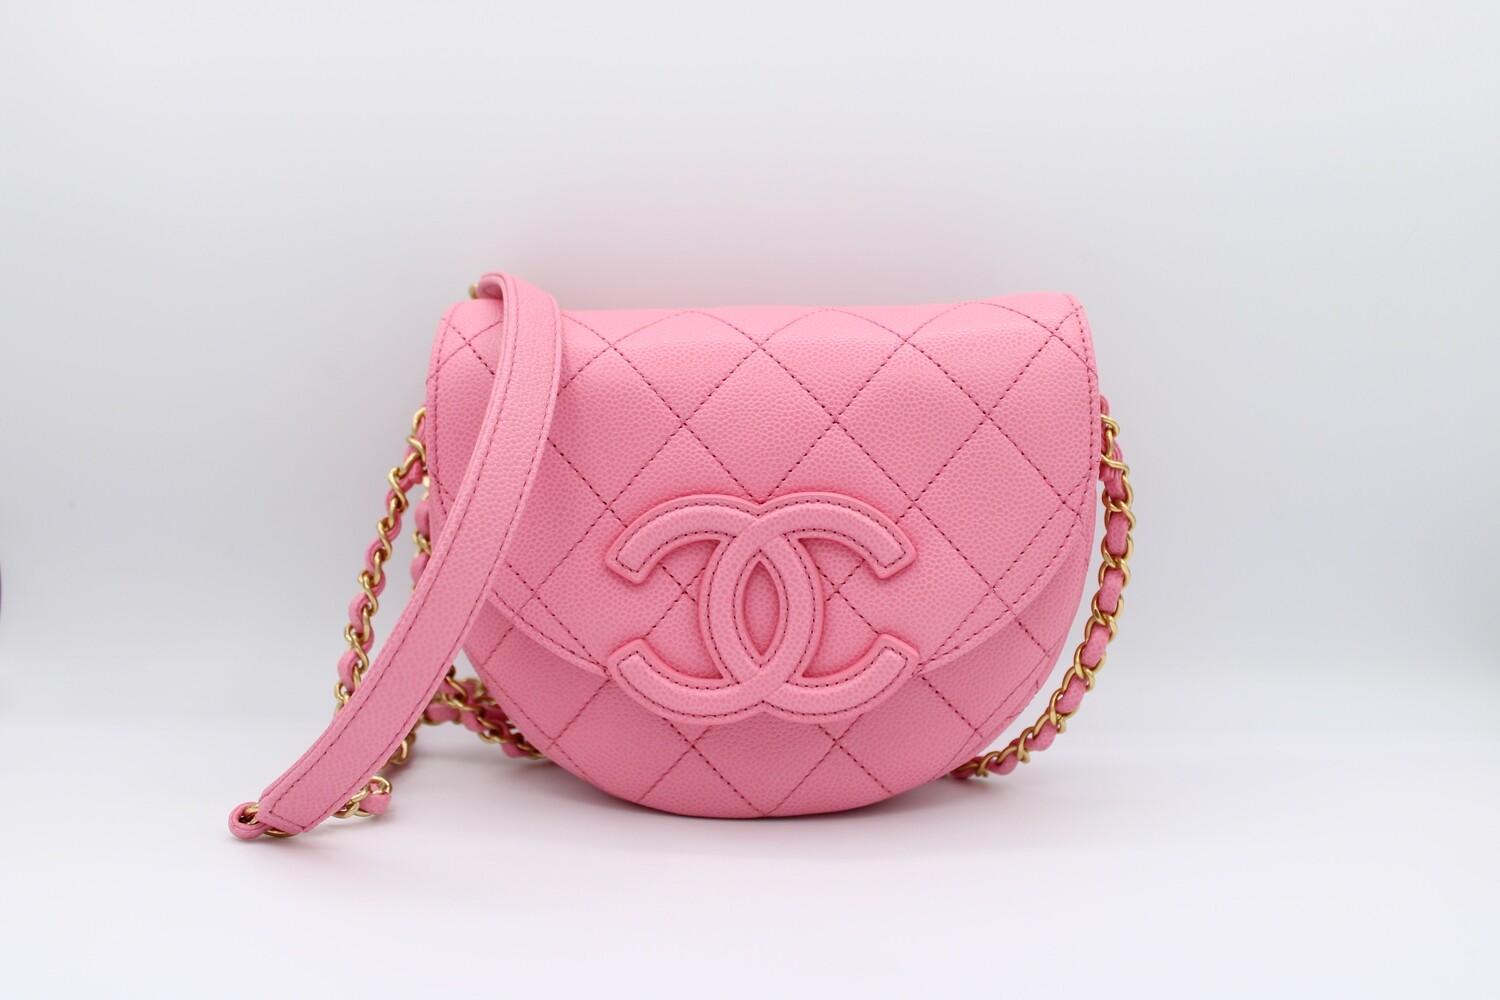 Chanel Mini Messenger Bag, Pink Caviar Leather, Gold Hardware, New